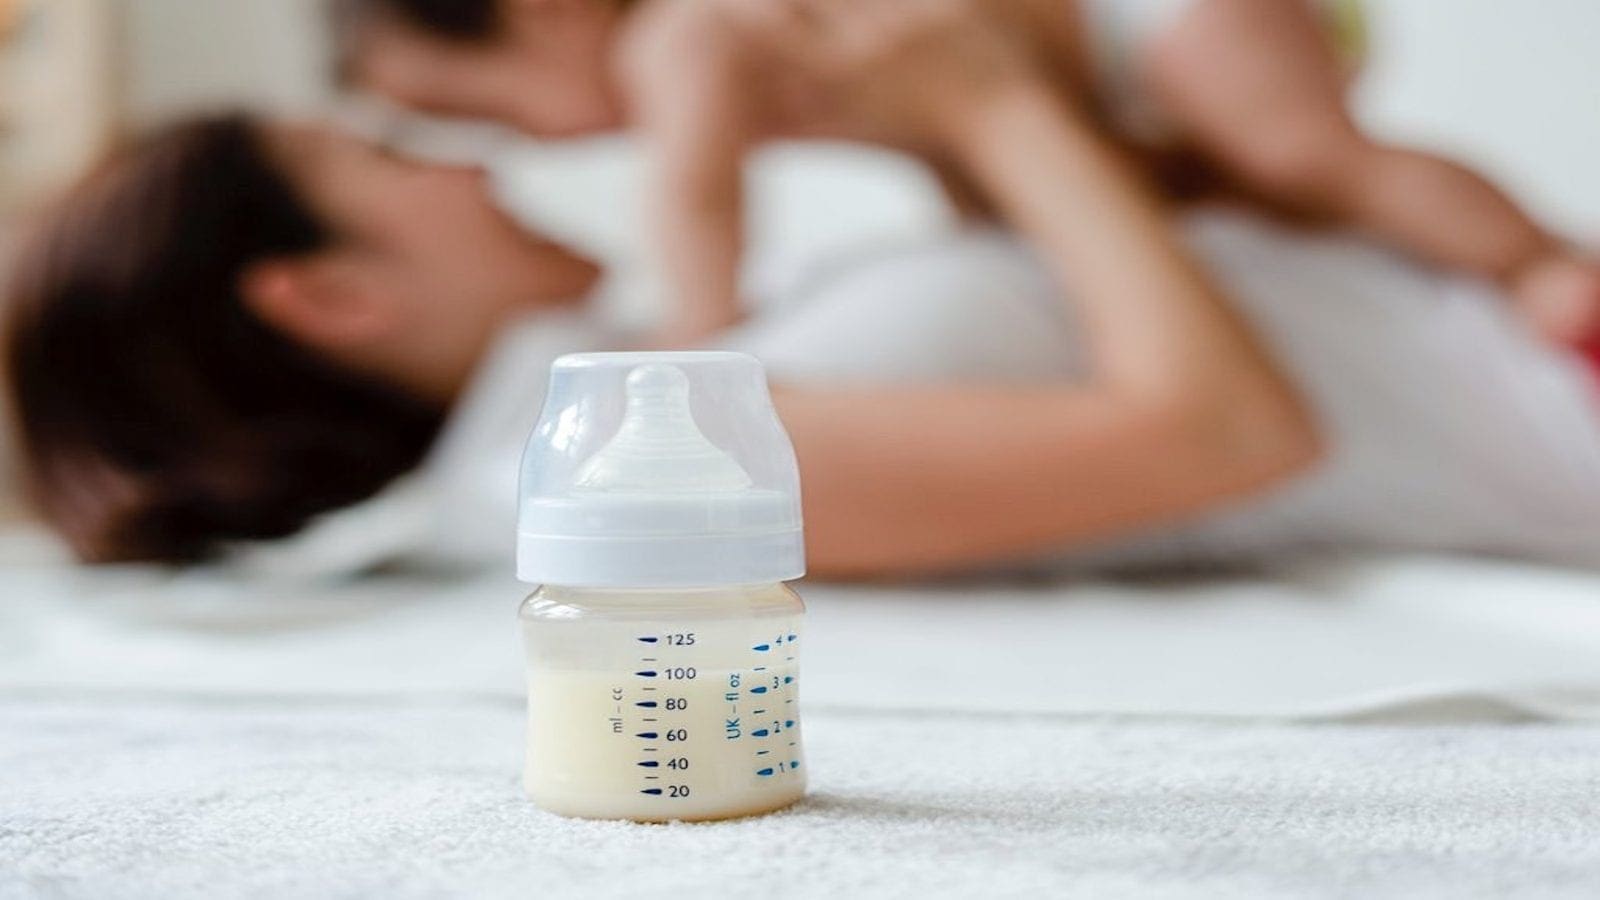 Human milk oligosaccharides bring infant formula closer to breast milk, New Chr. Hansen study finds  